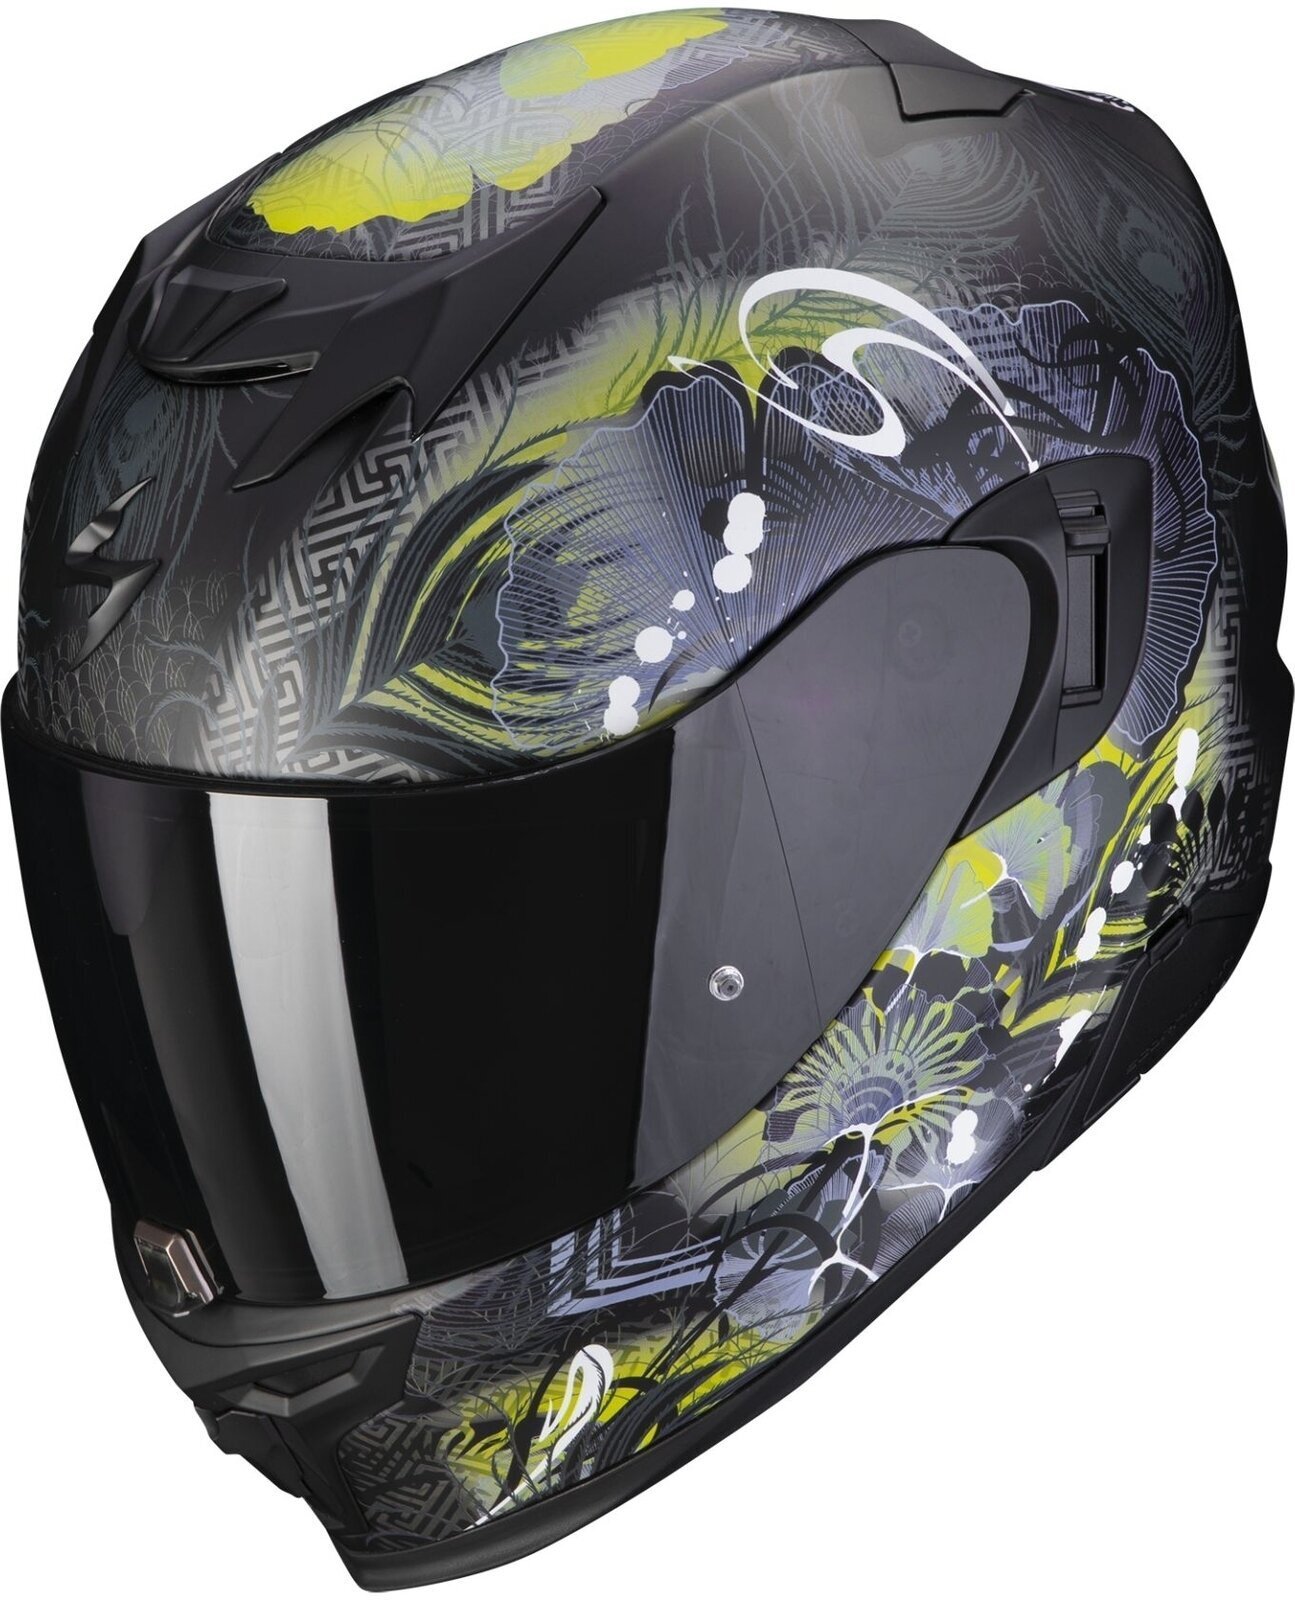 Helm Scorpion EXO 520 EVO AIR MELROSE Matt Black/Yellow XS Helm